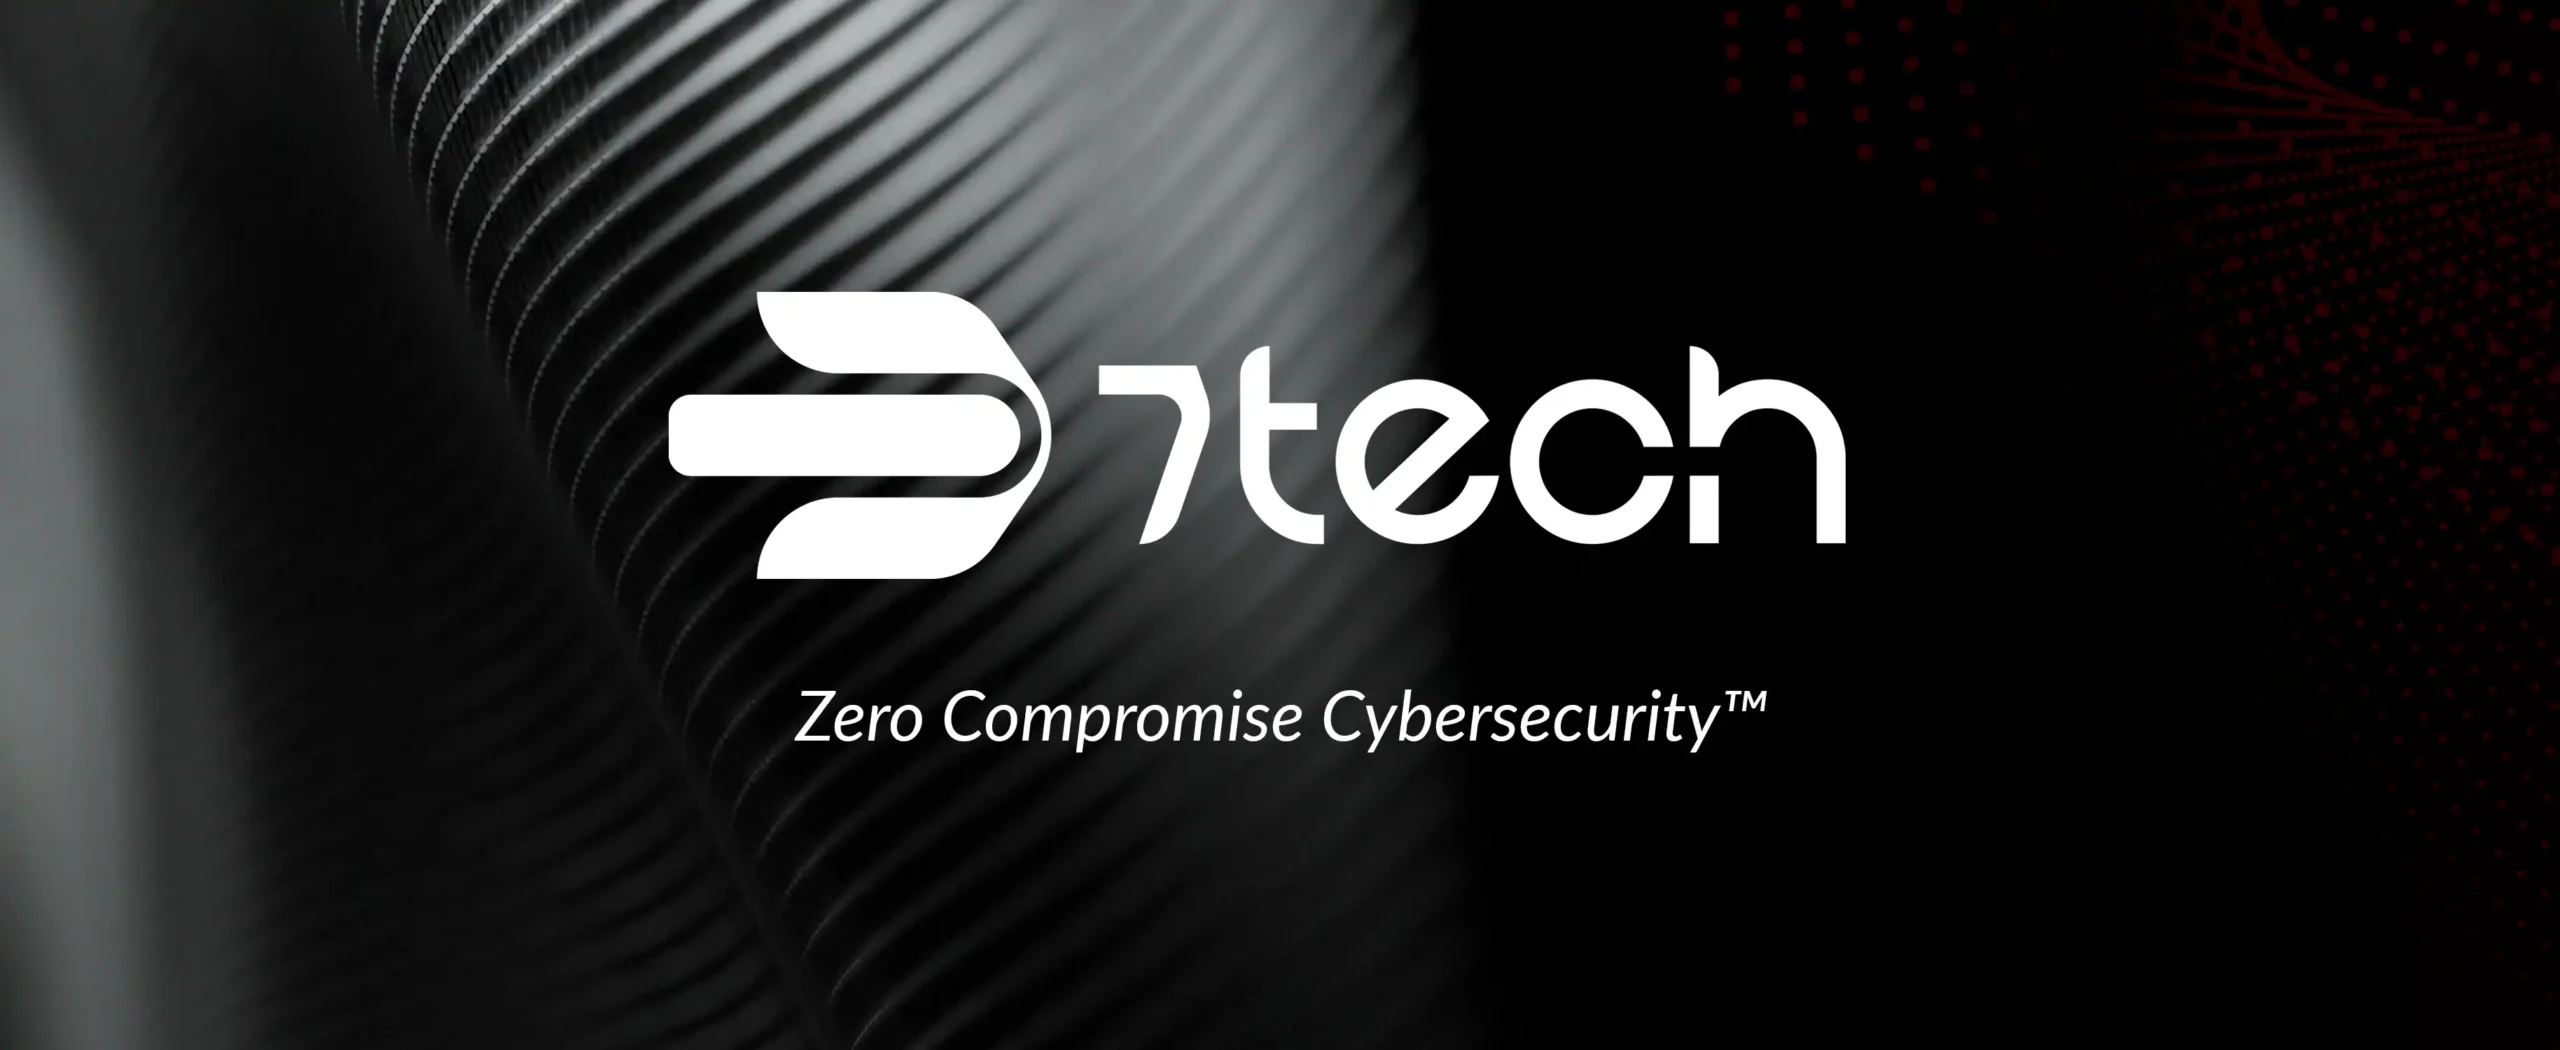 7tech MSSP Cybersecurity Company logo and tagline